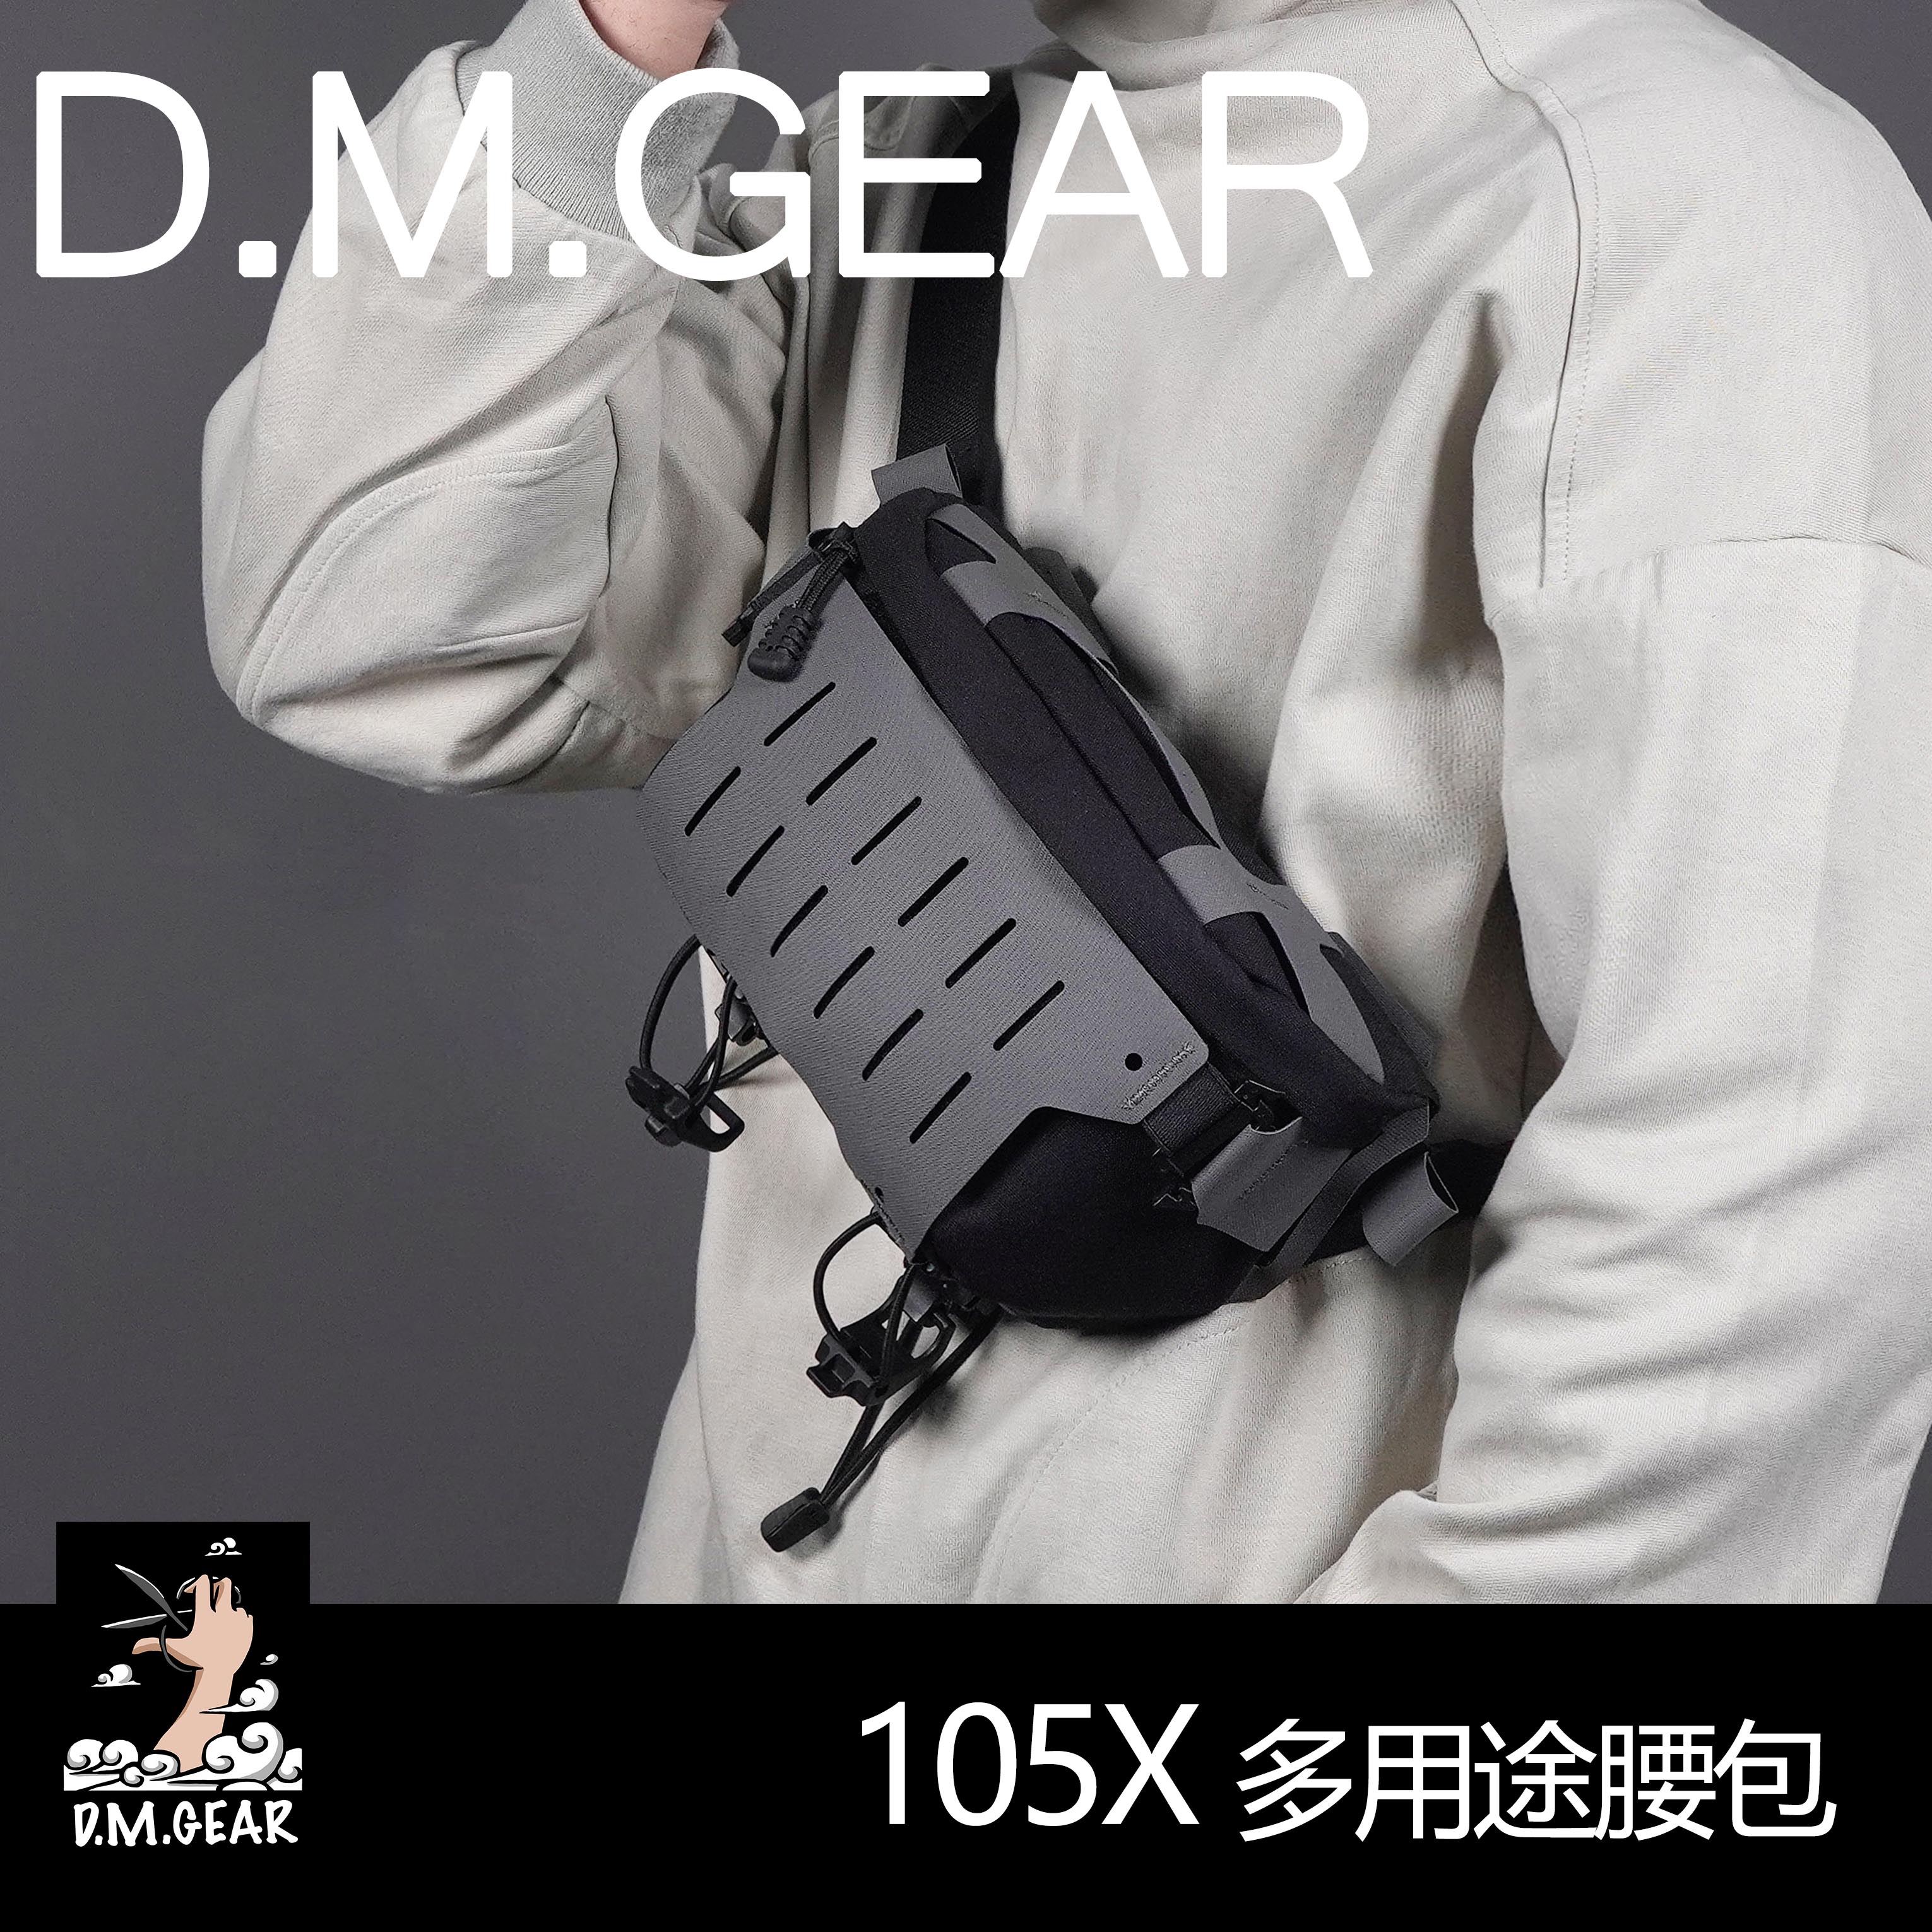 DMgear 105X多用途腰包 机能包 多形态挎包 通勤 附件包